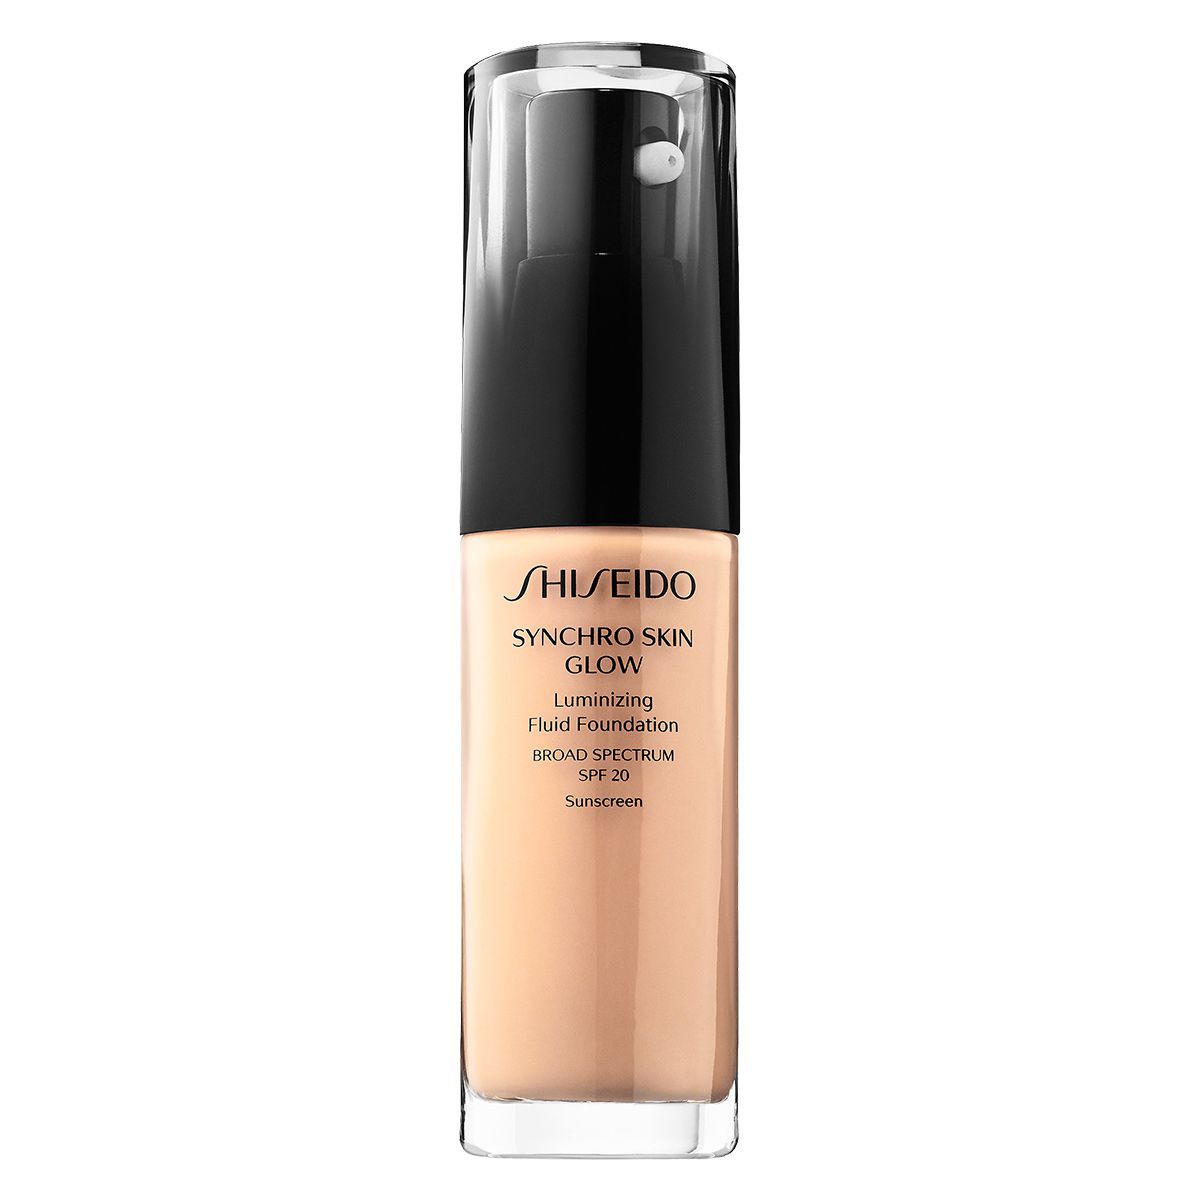 Shiseido Synchro Skin Glow Luminizing Fluid Foundation Broad Spectrum SPF 20